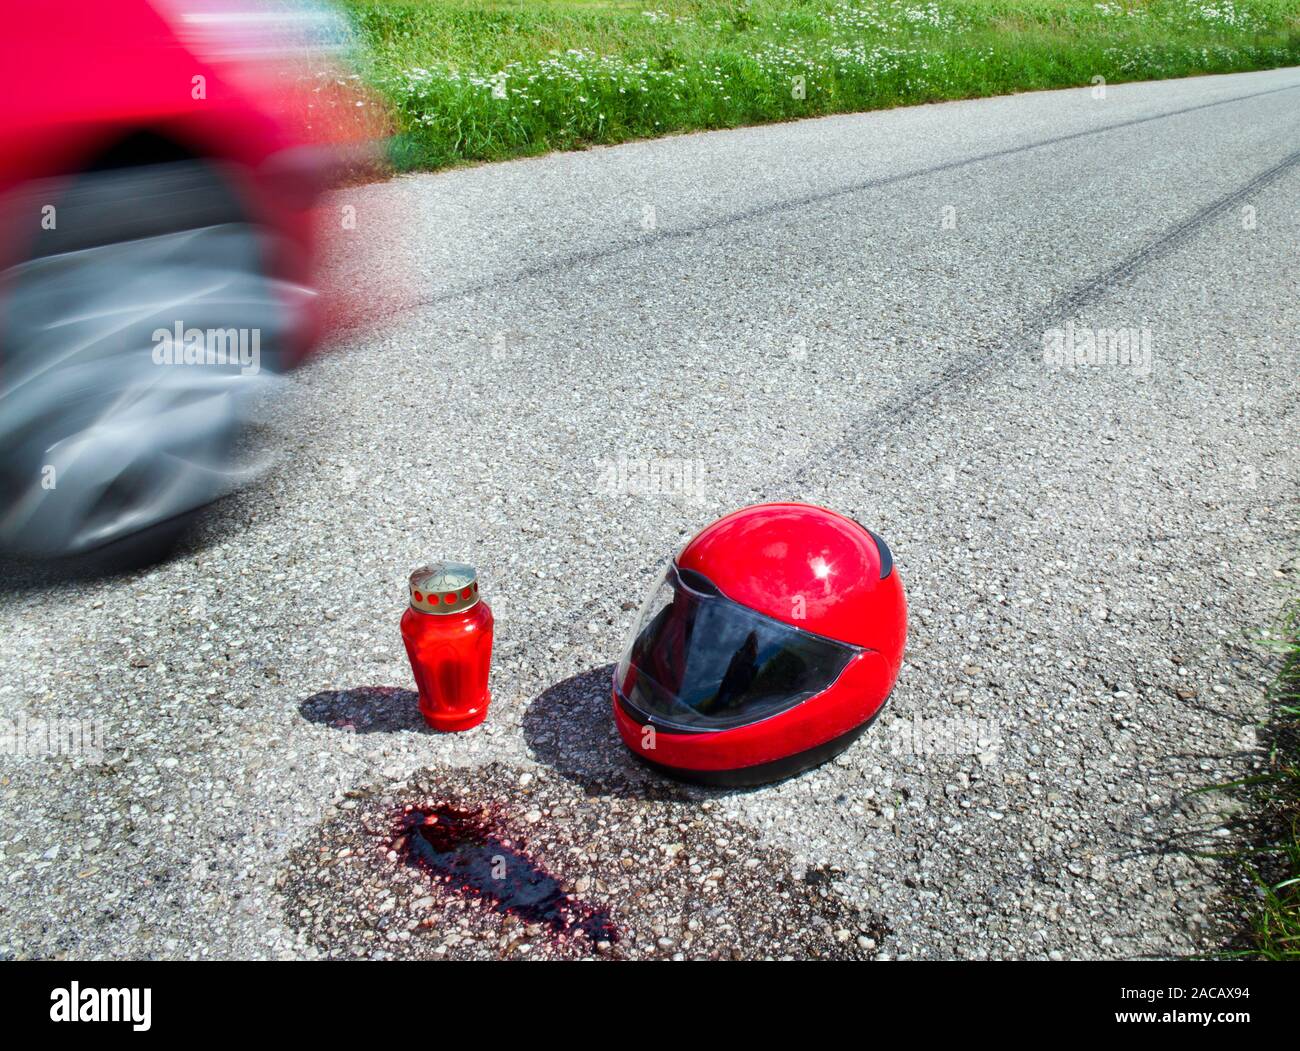 Crash helmet after traffic accident Stock Photo